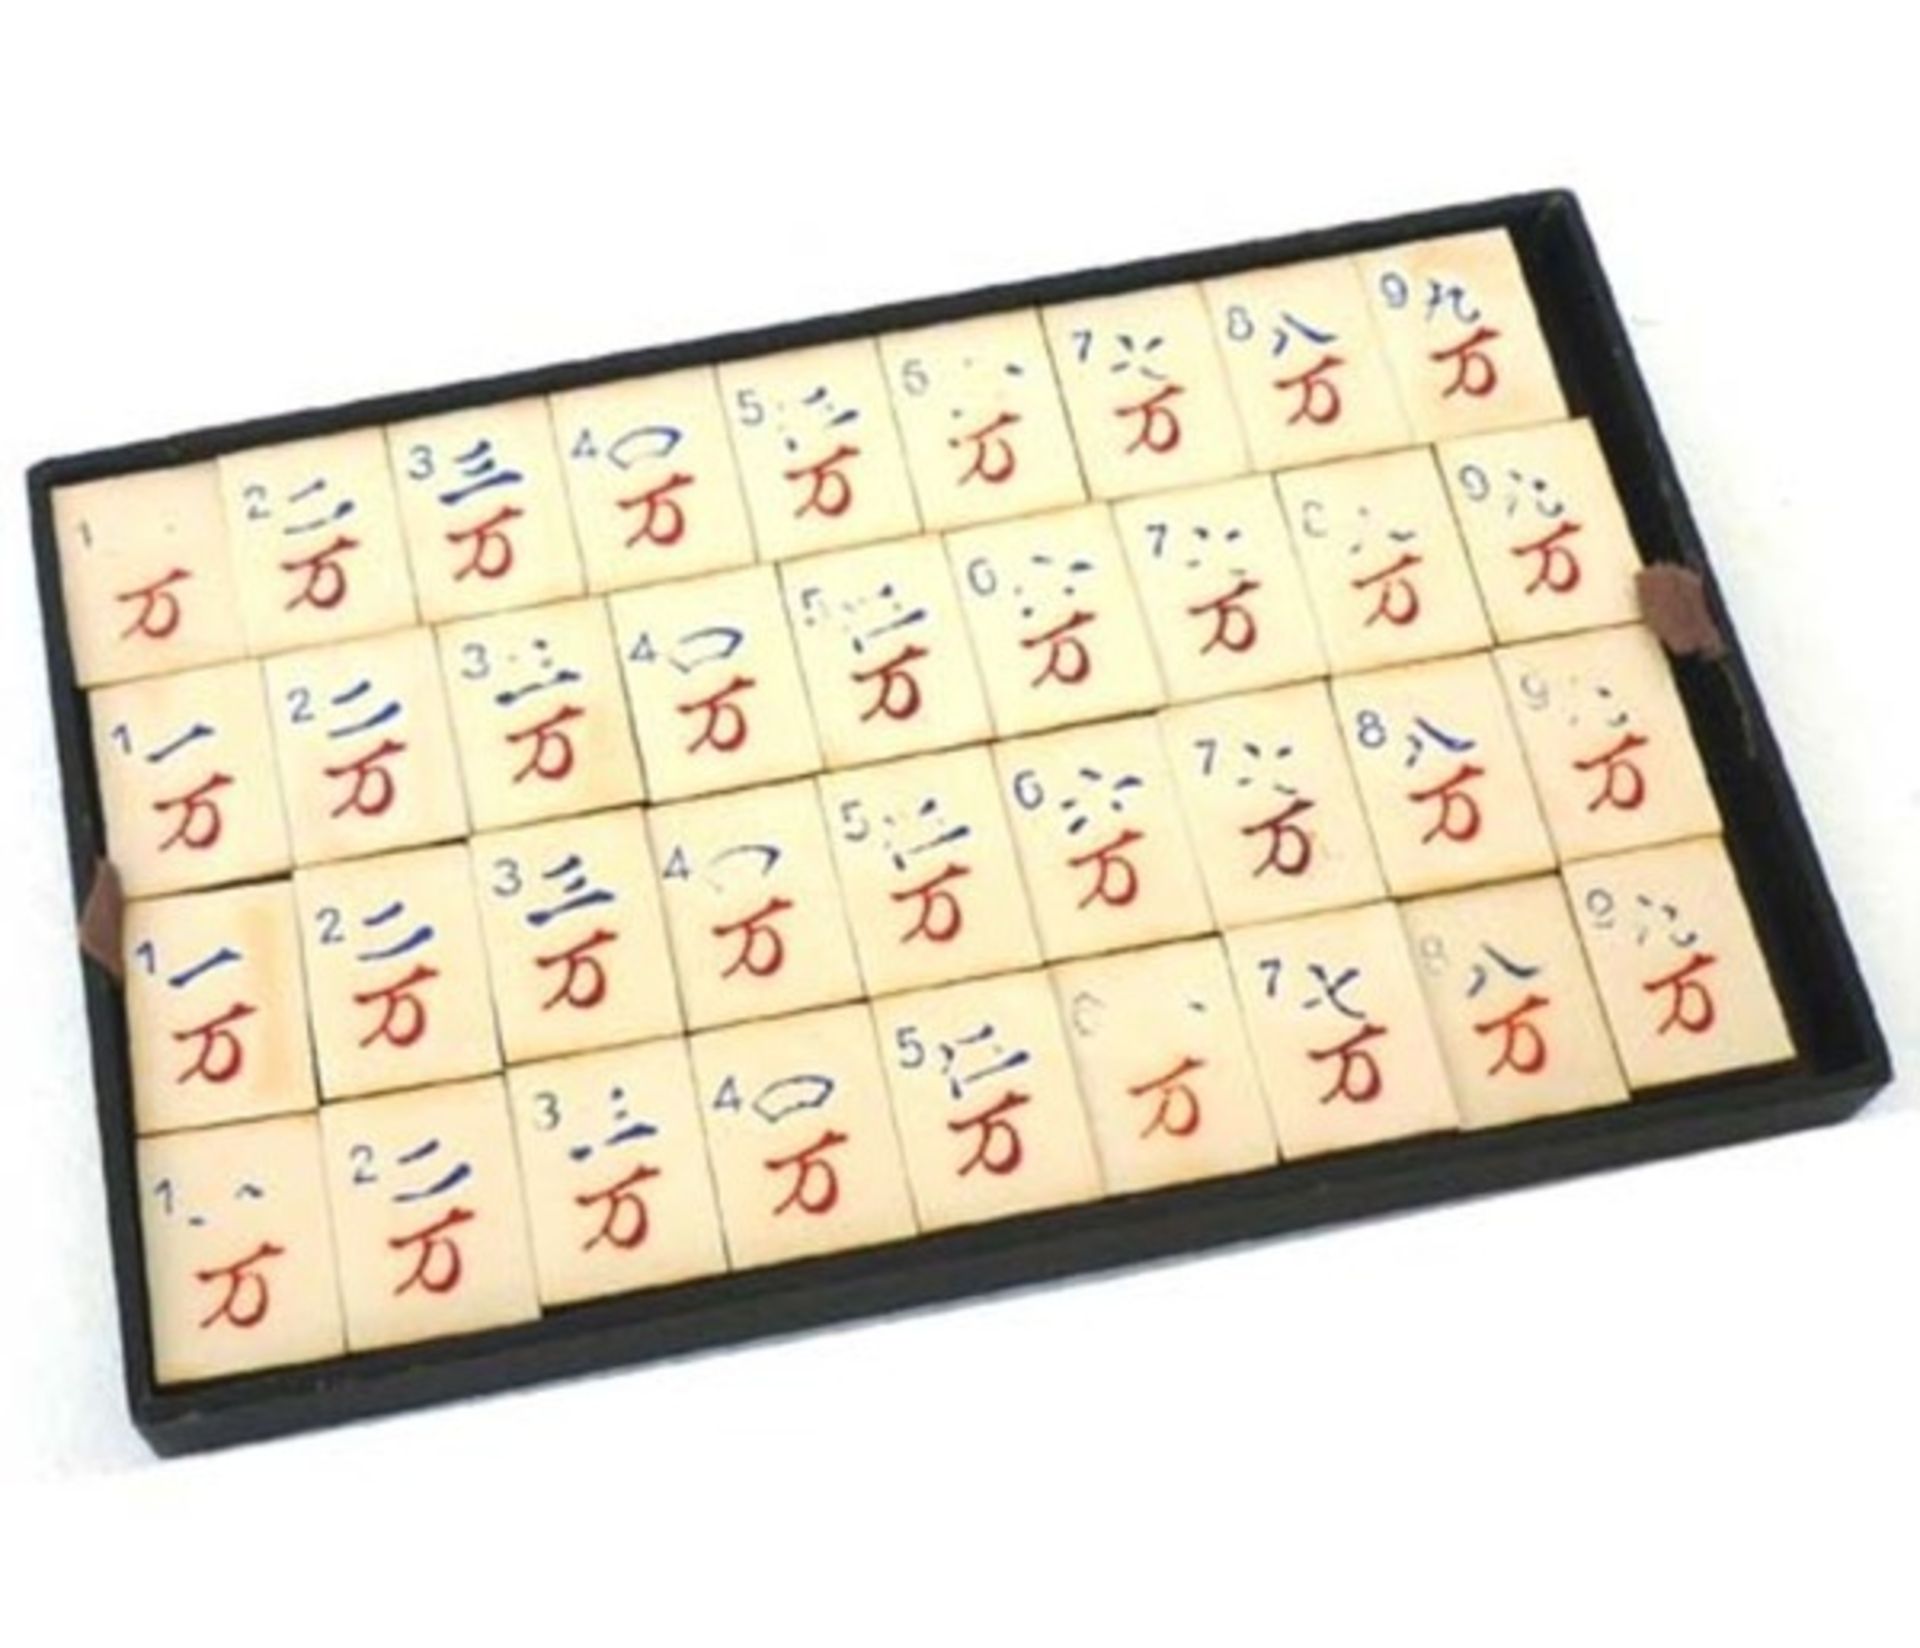 (Mahjong) Mahjong Europees, F. AD. Richter & Cie AG. ca. 1930 - Bild 11 aus 15